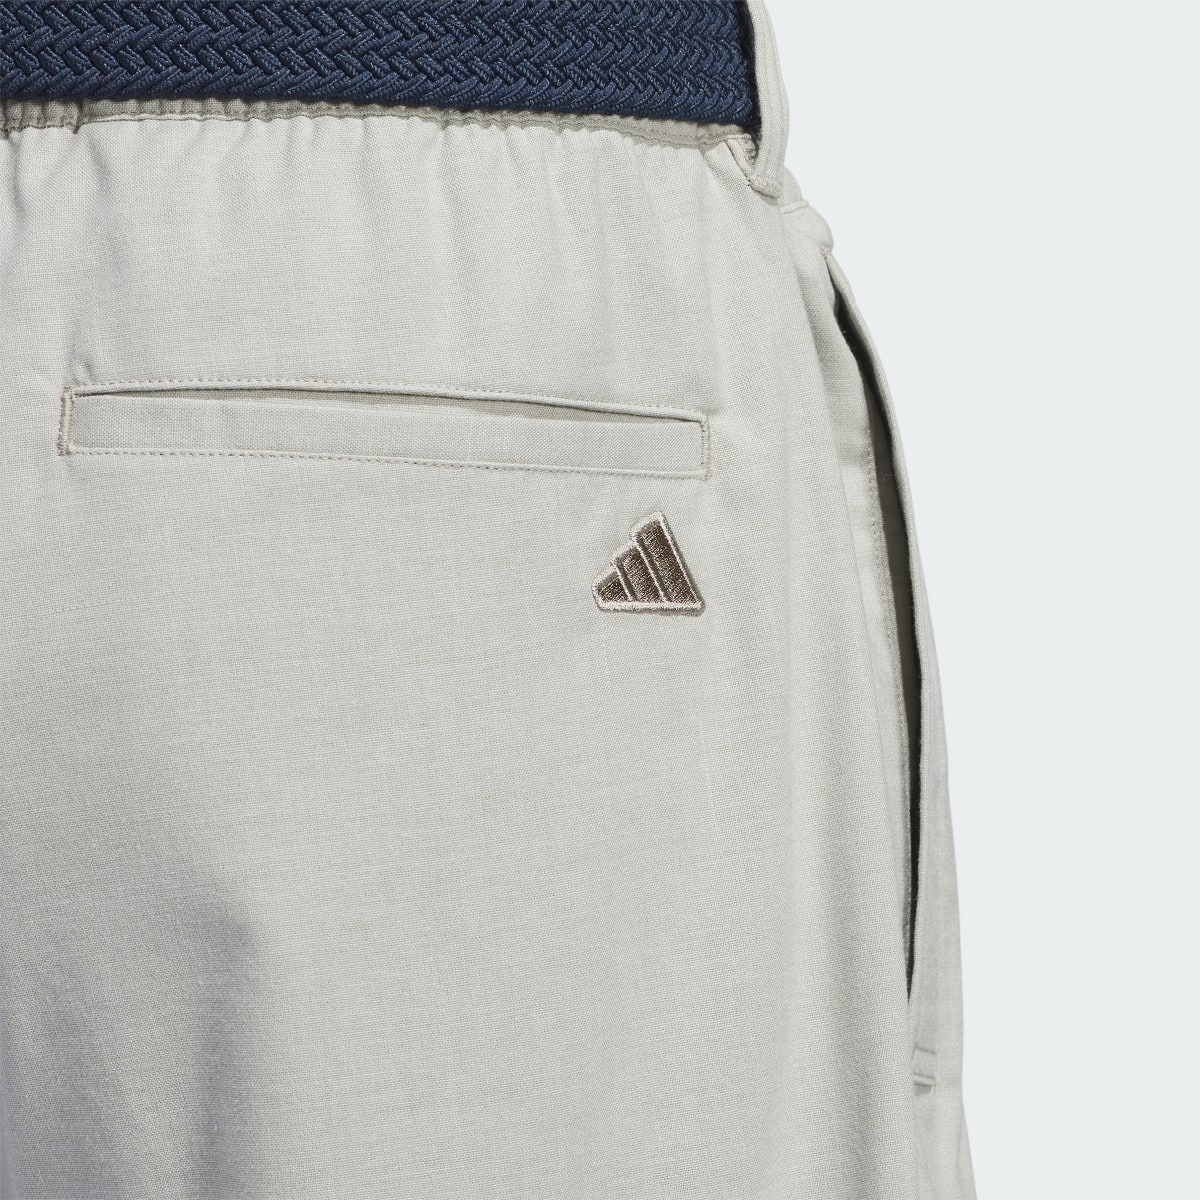 Adidas Go-To Versatile Trousers. 7